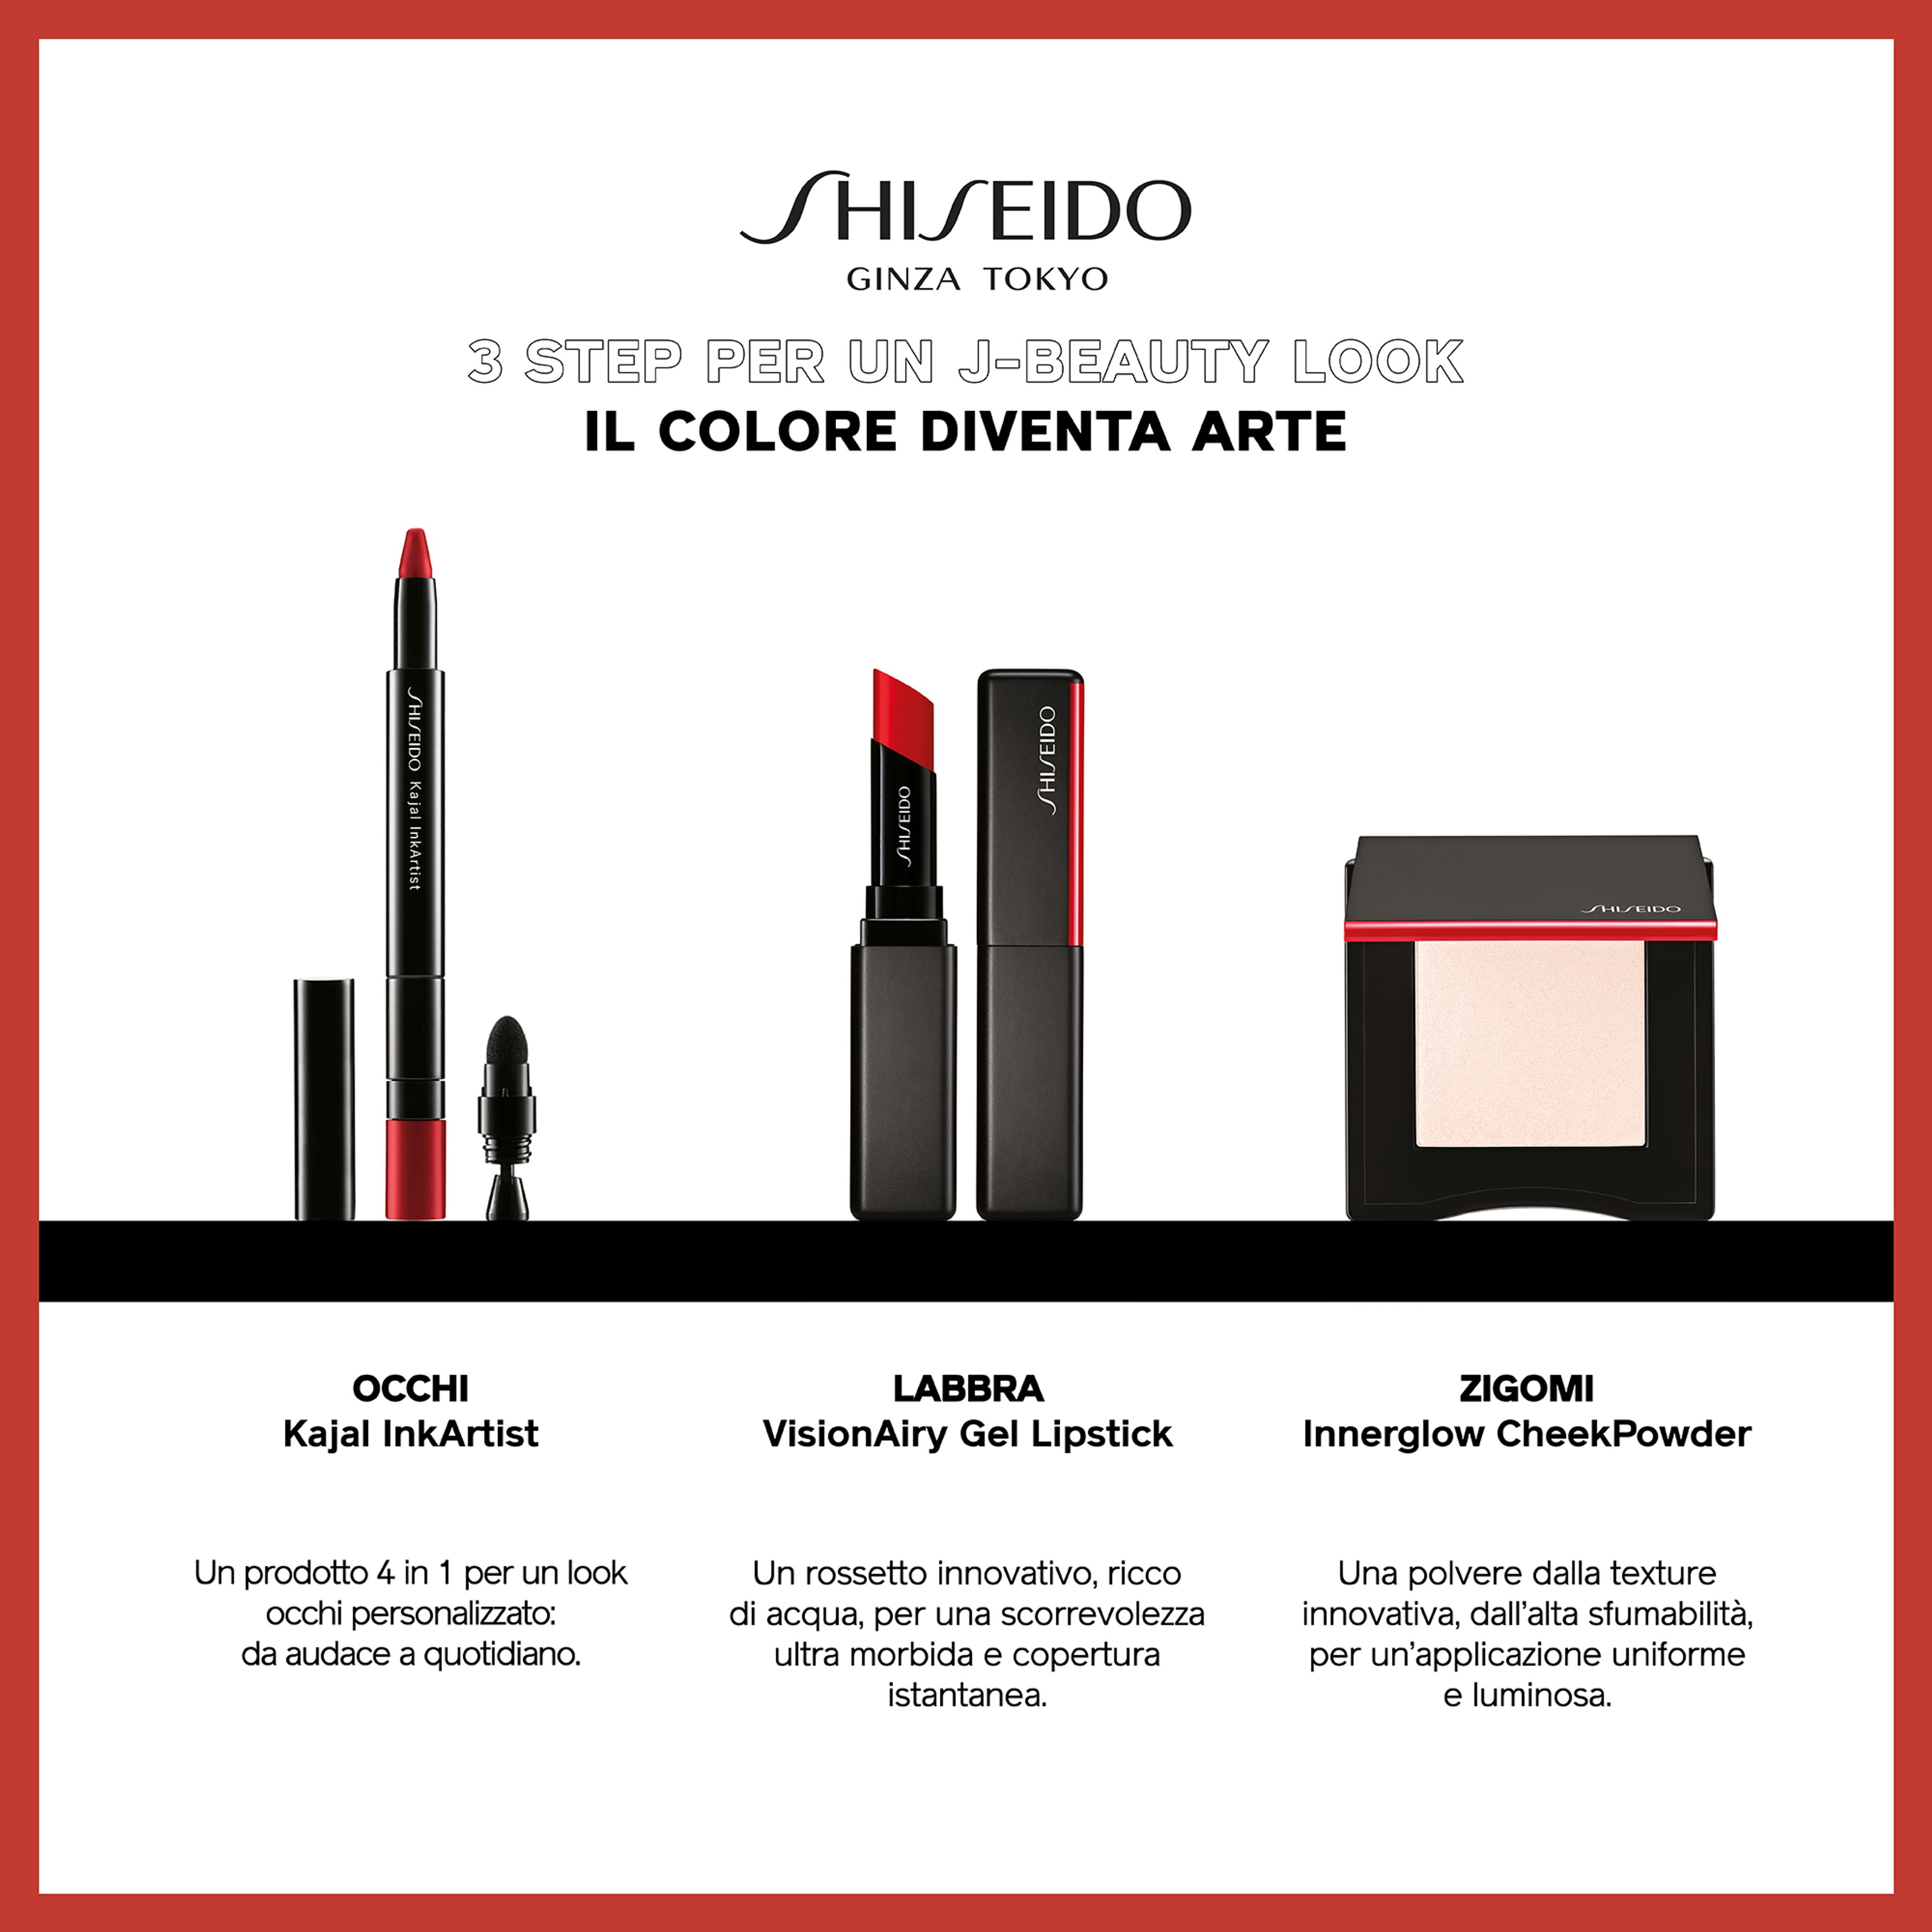 Shiseido Visionairy Gel Lipstick 7